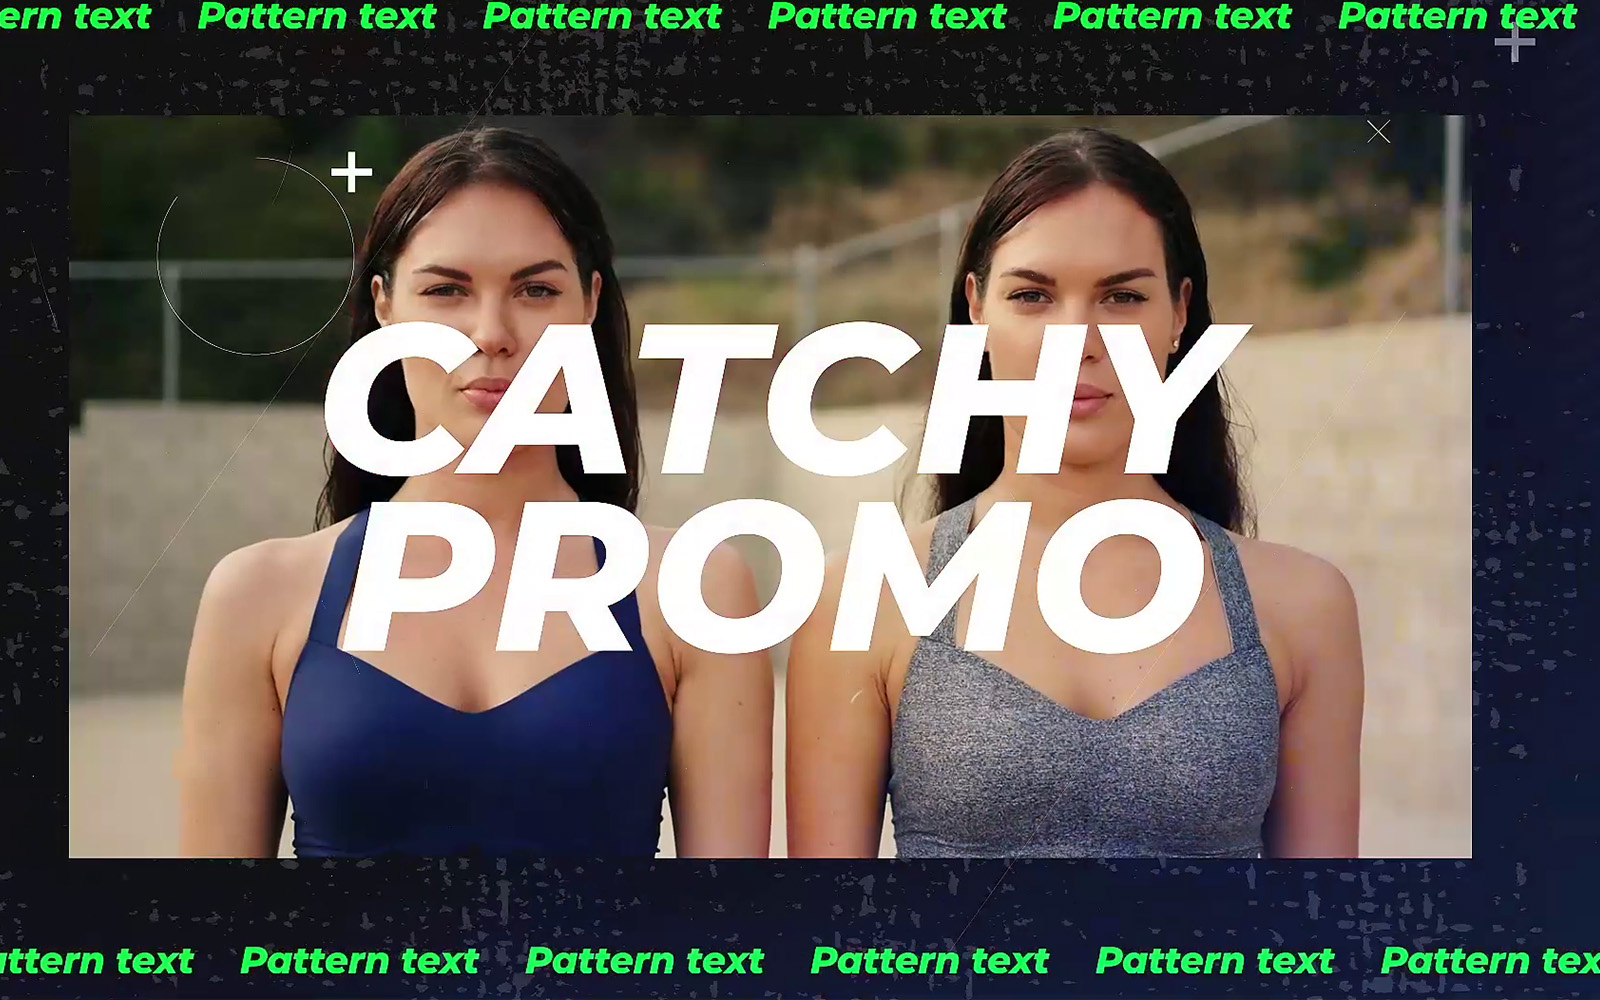 Catchy Promo: (Mogrt) Premiere Pro template